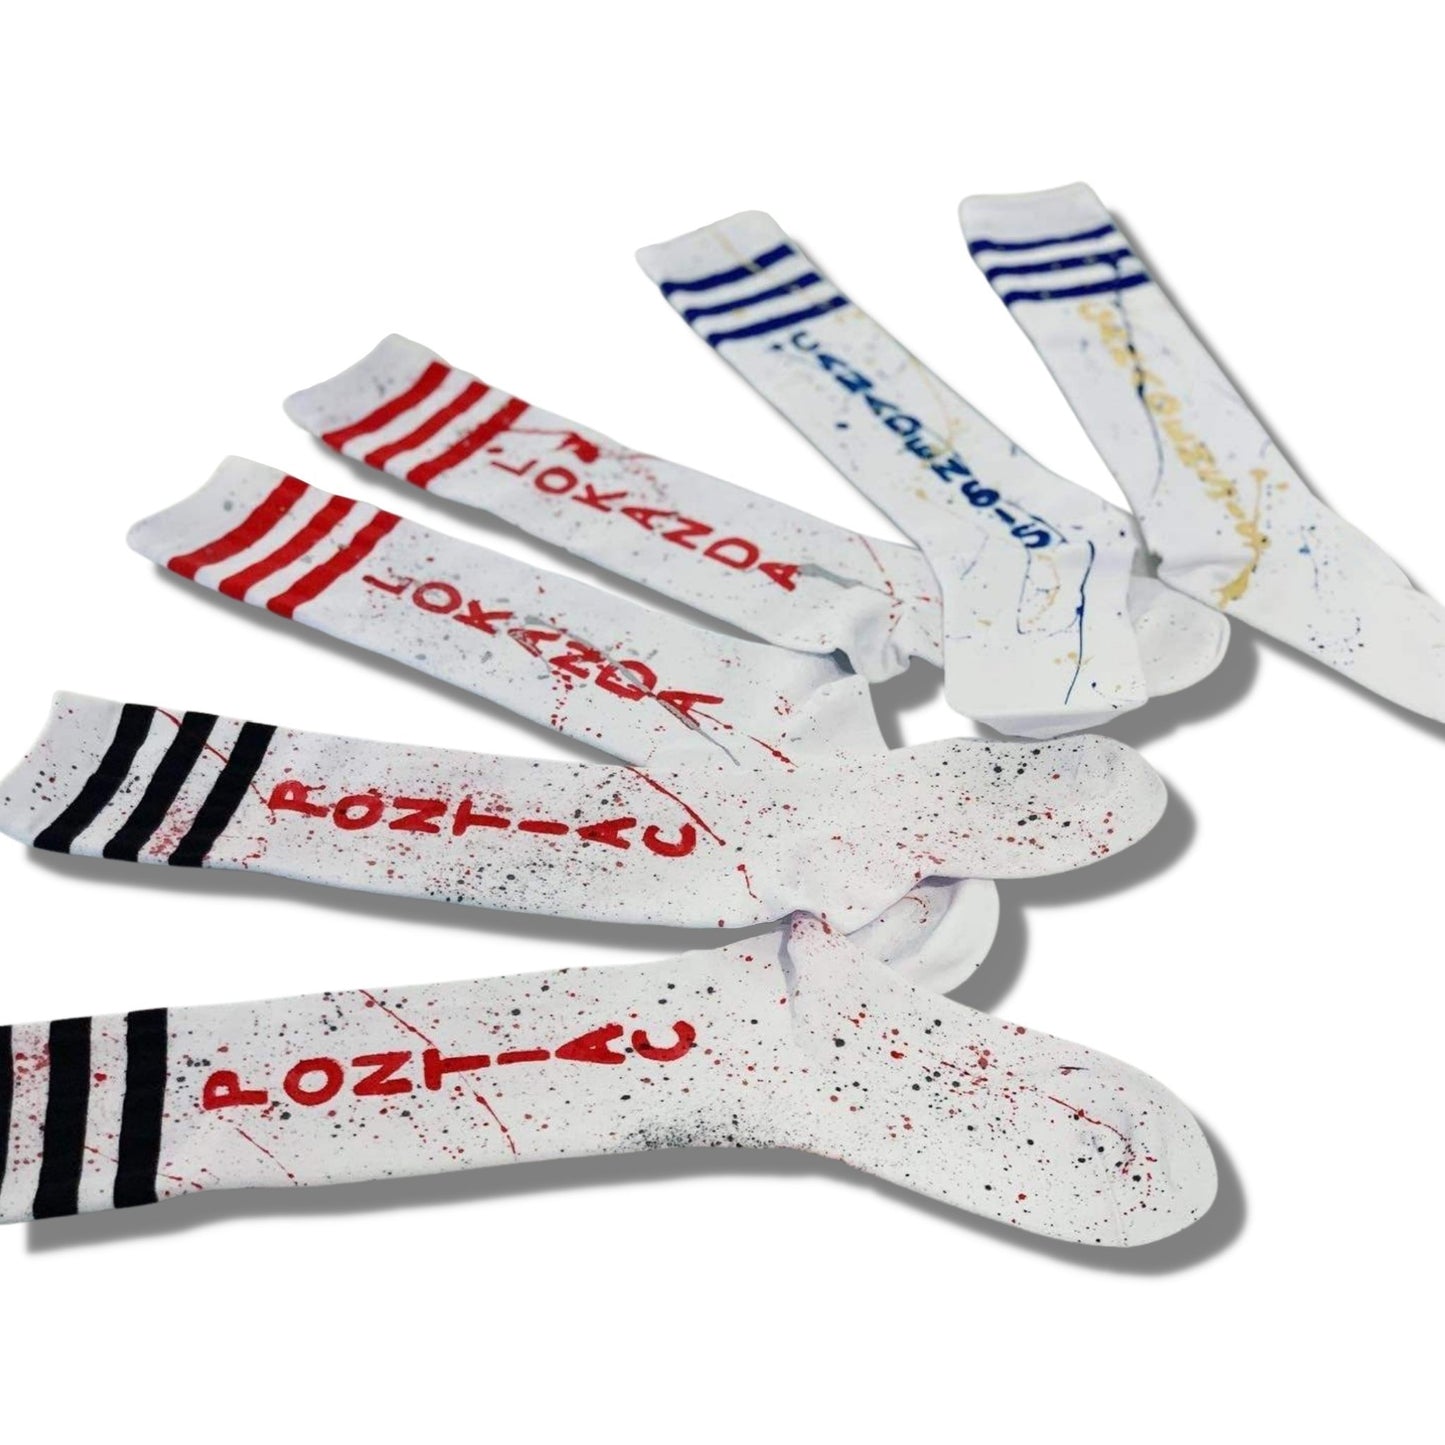 Custom Handpainted and Splattered Socks - a Spirit Animal - Socks Camp camp socks Nike Elite